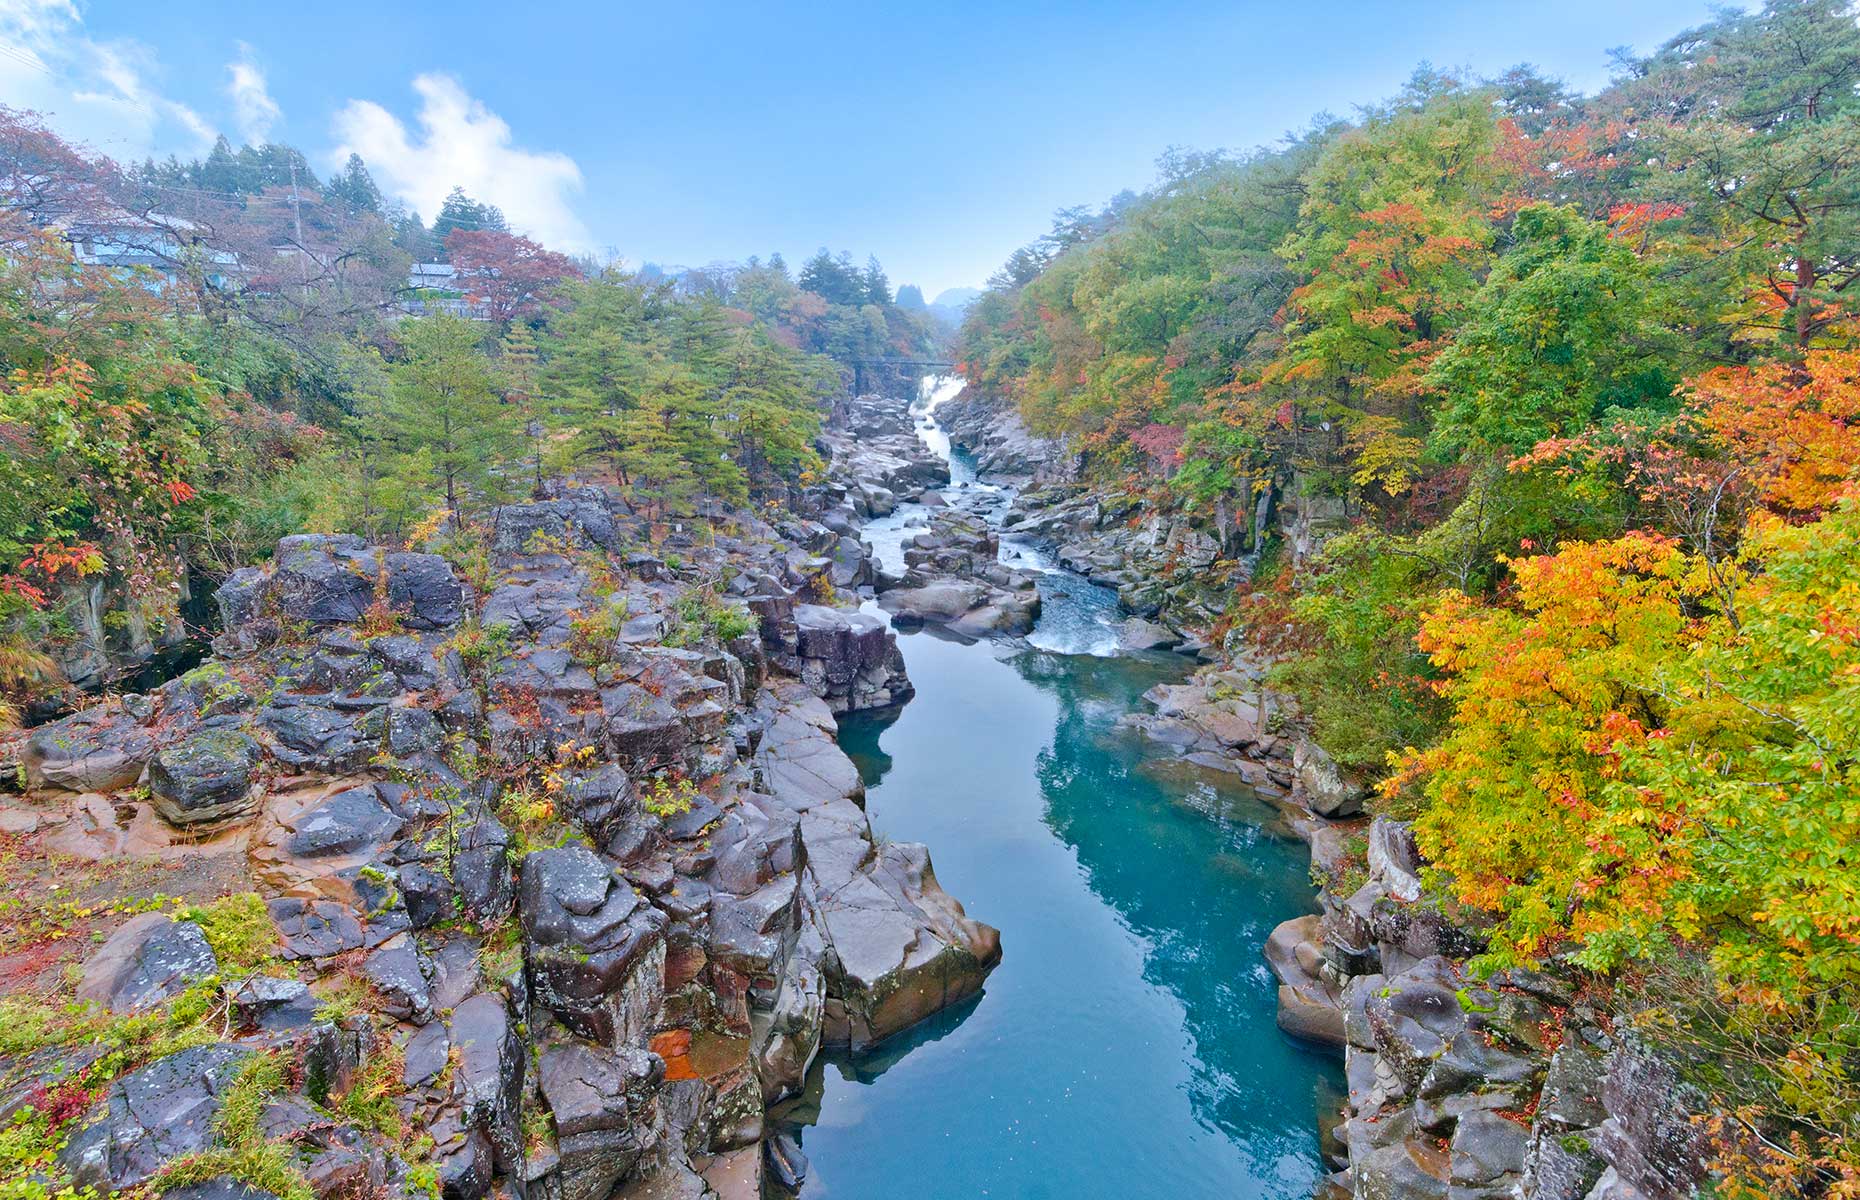 Genbikei gorge in northern Japan